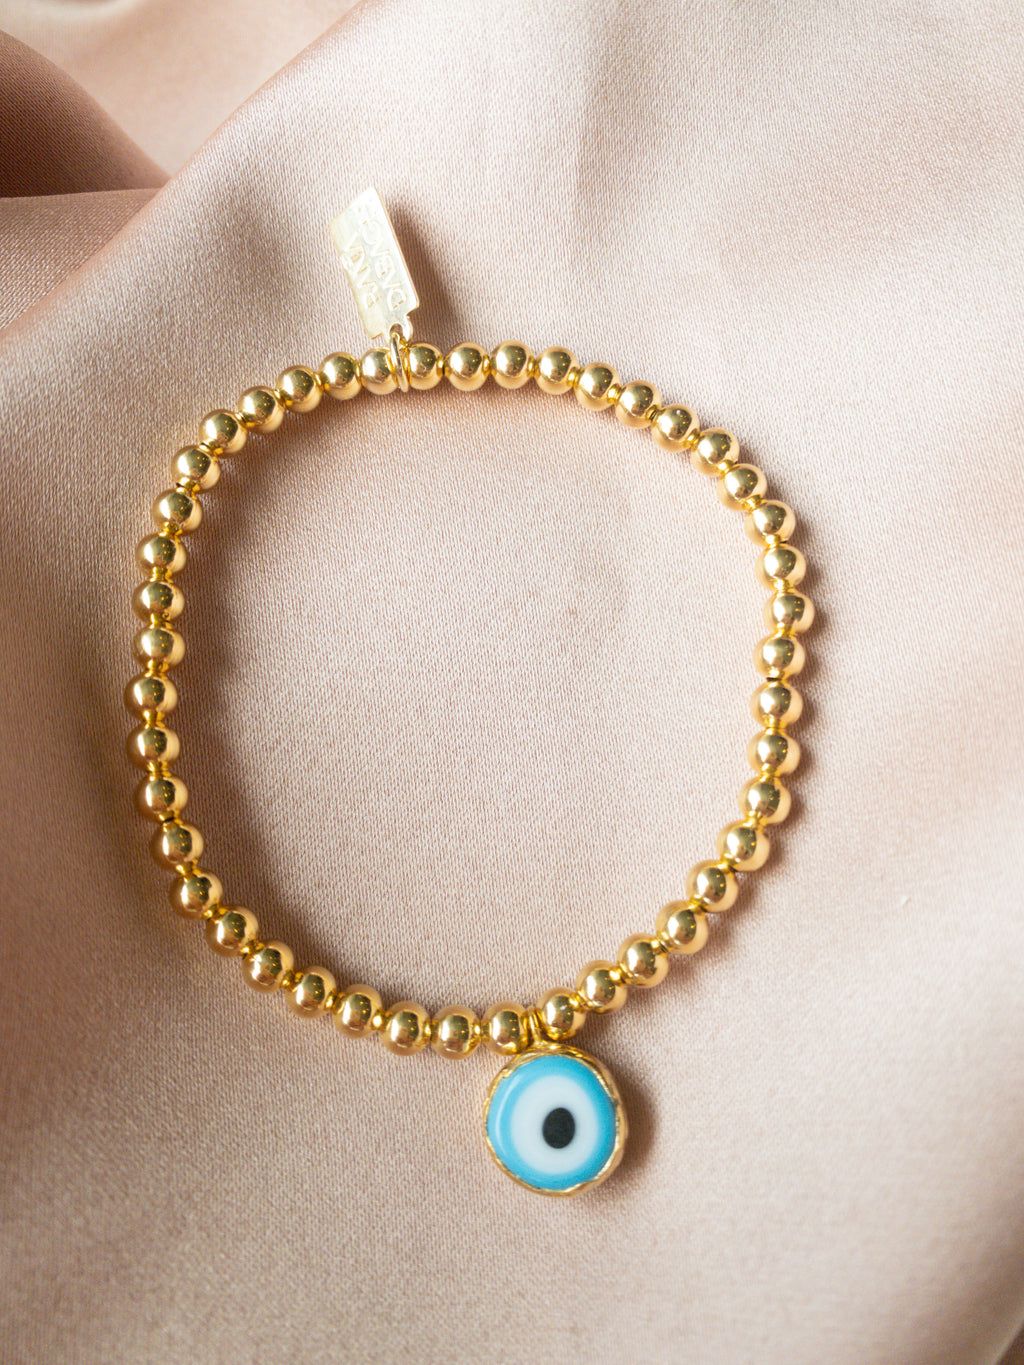 Naxos Bracelet